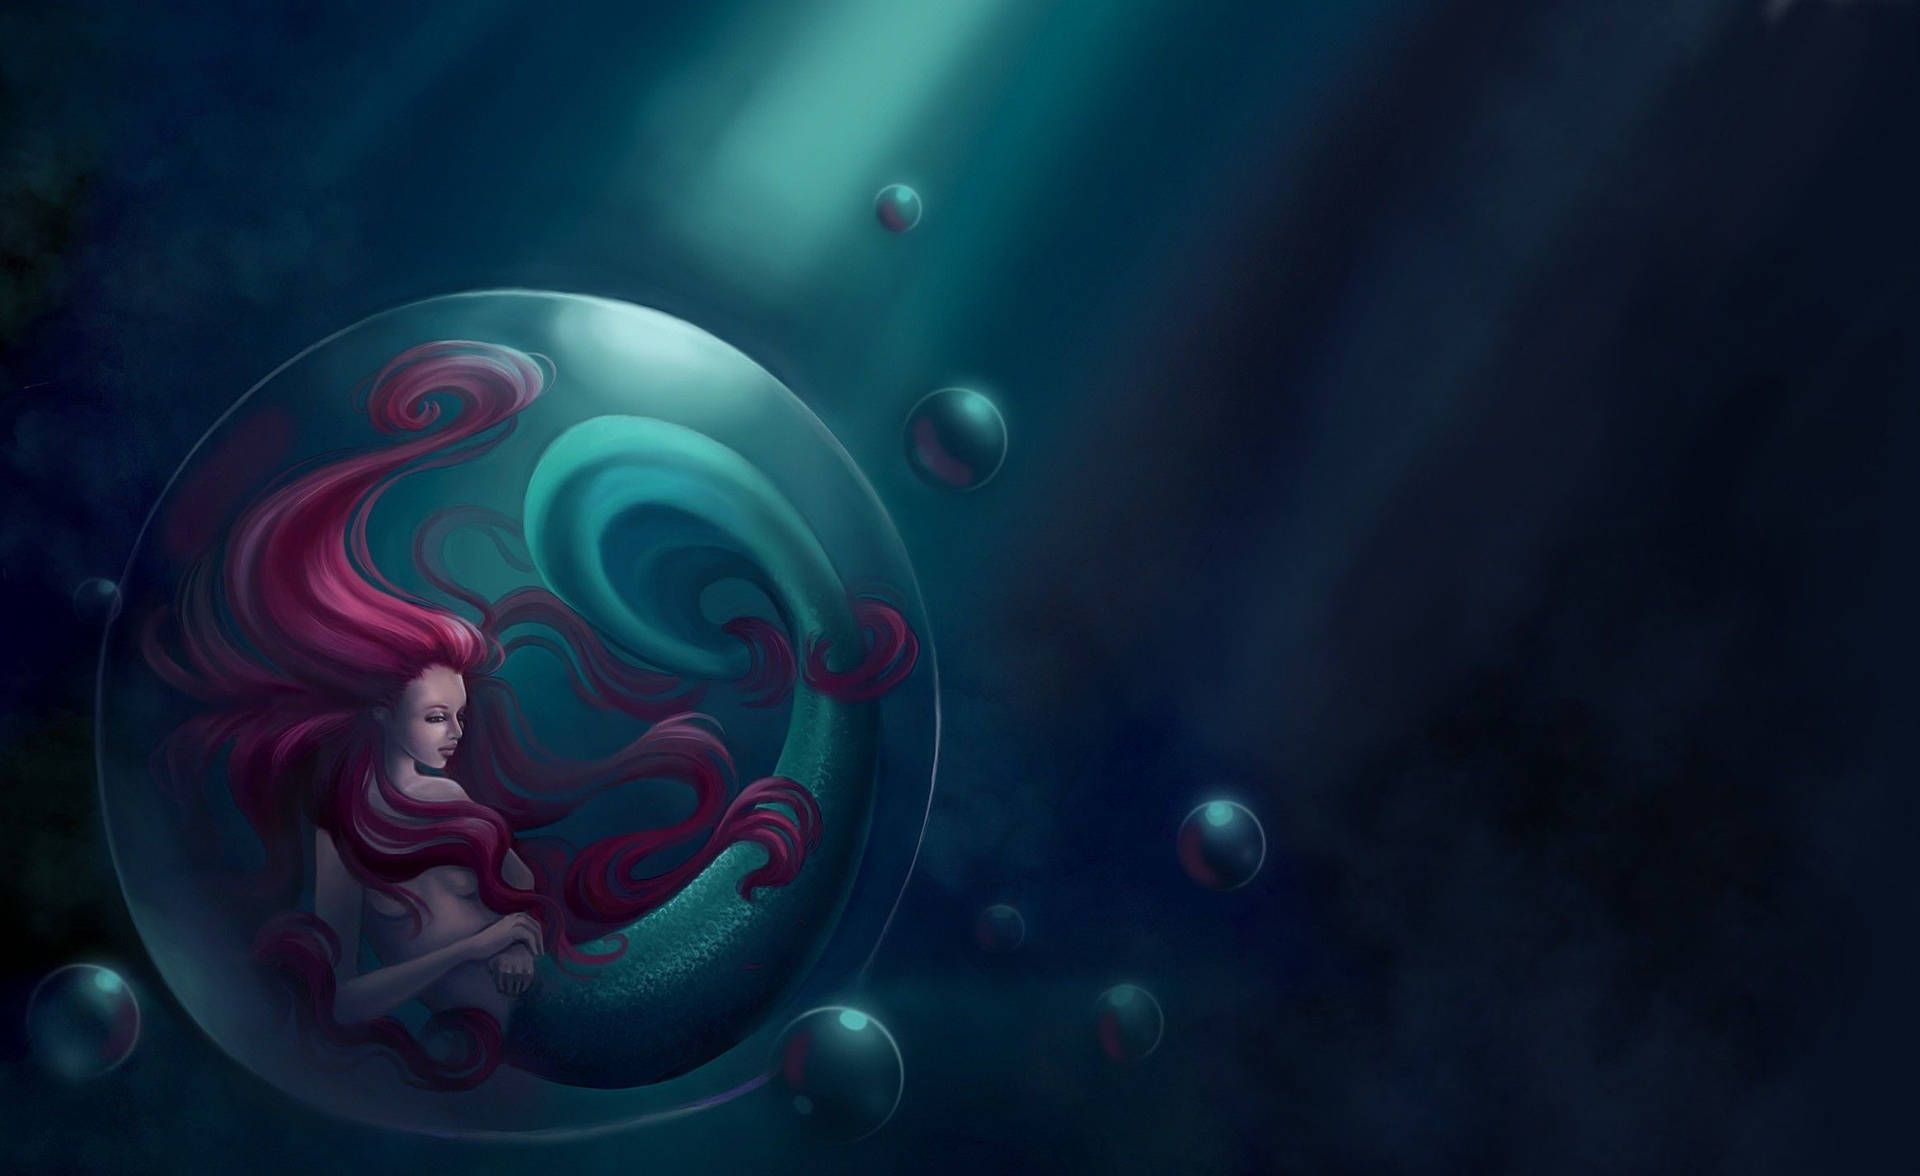 Mermaid in a bubble wallpaper - Mermaid